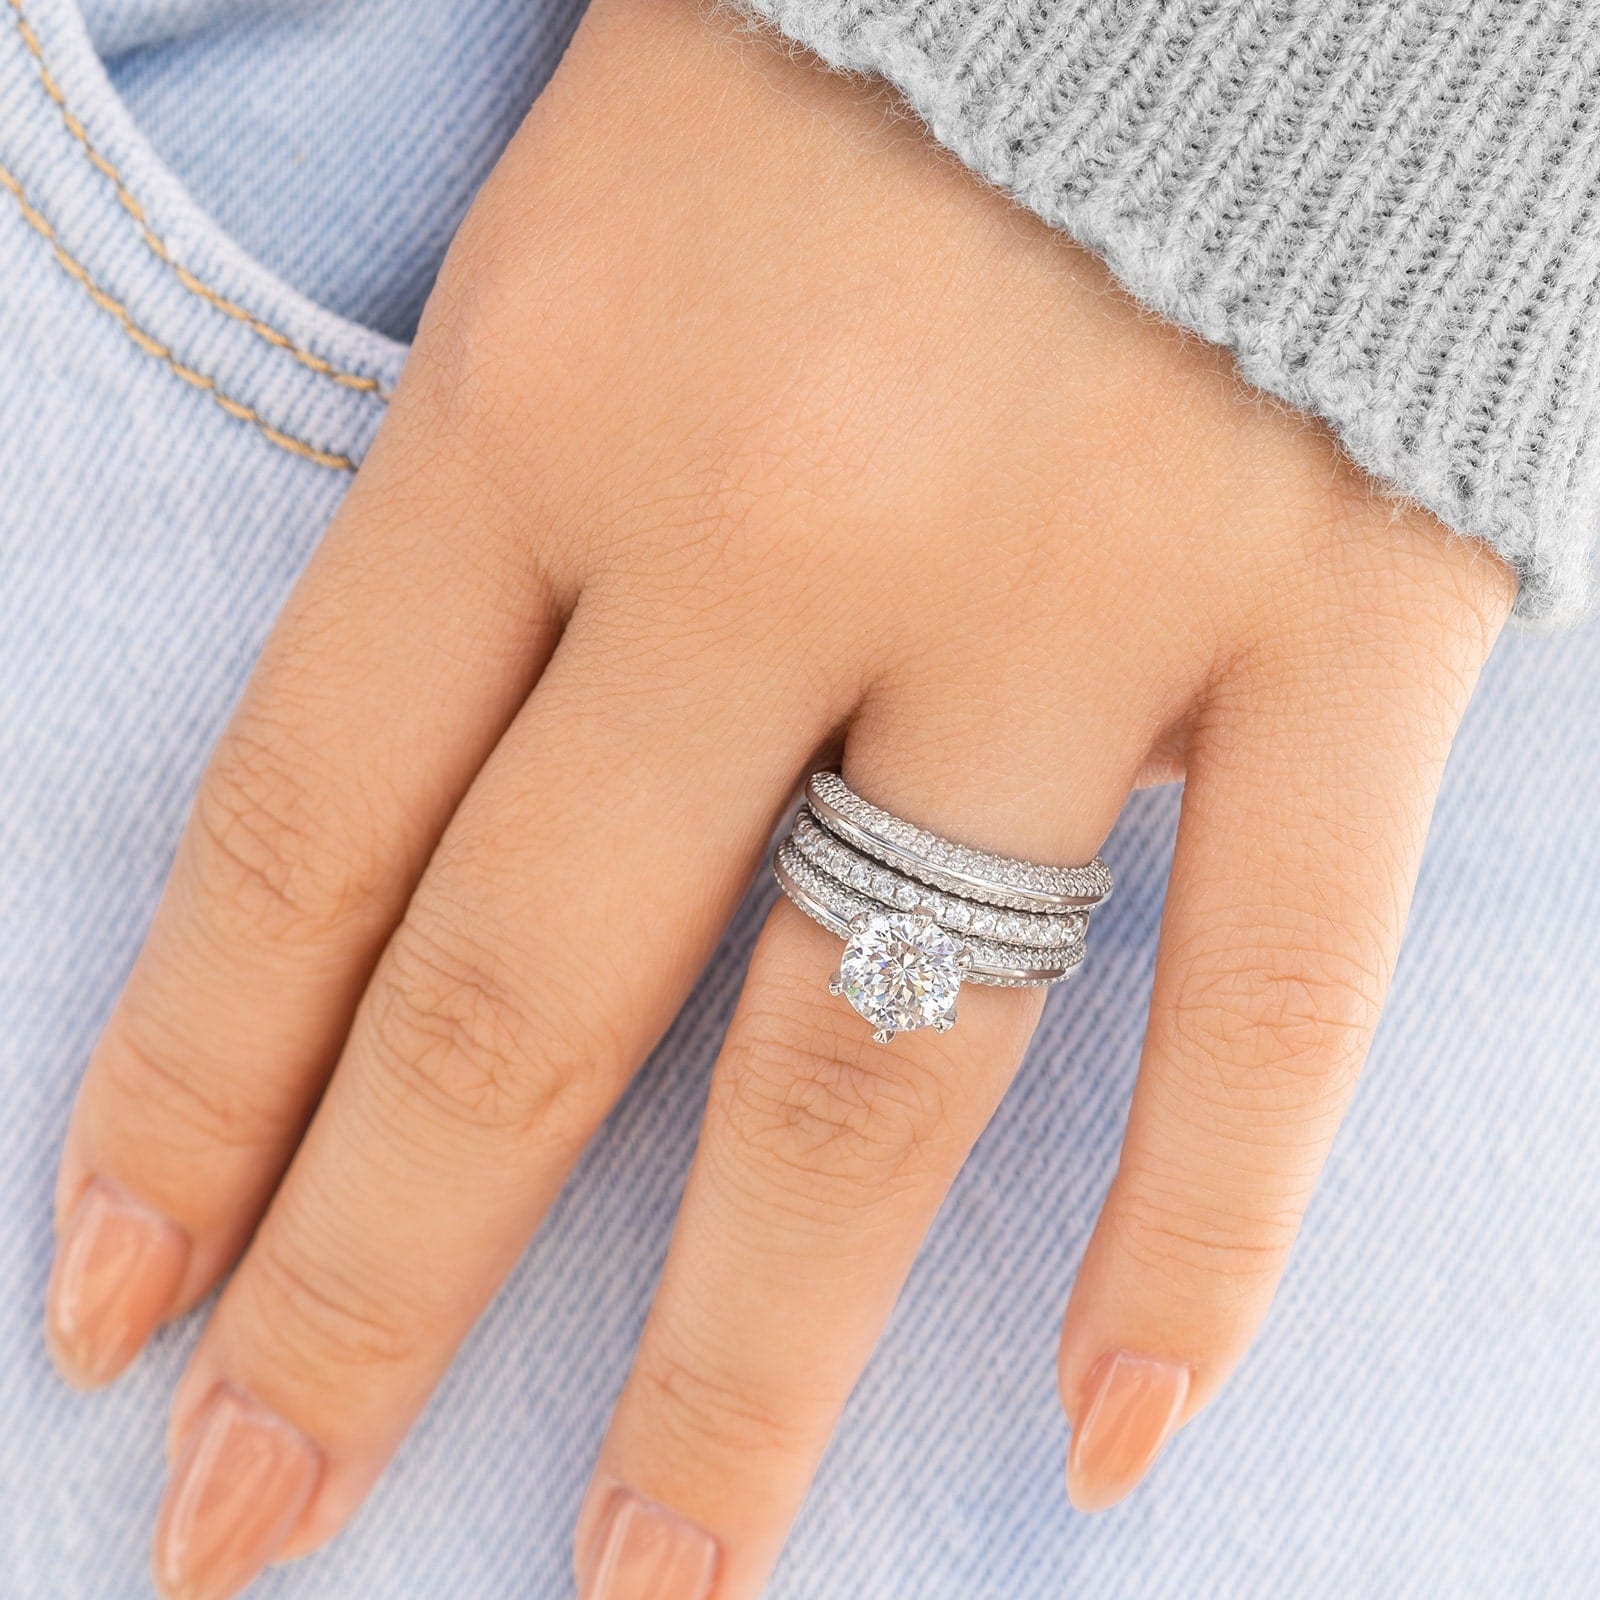 Stunning 2 carat silver wedding ring set modeled on hand